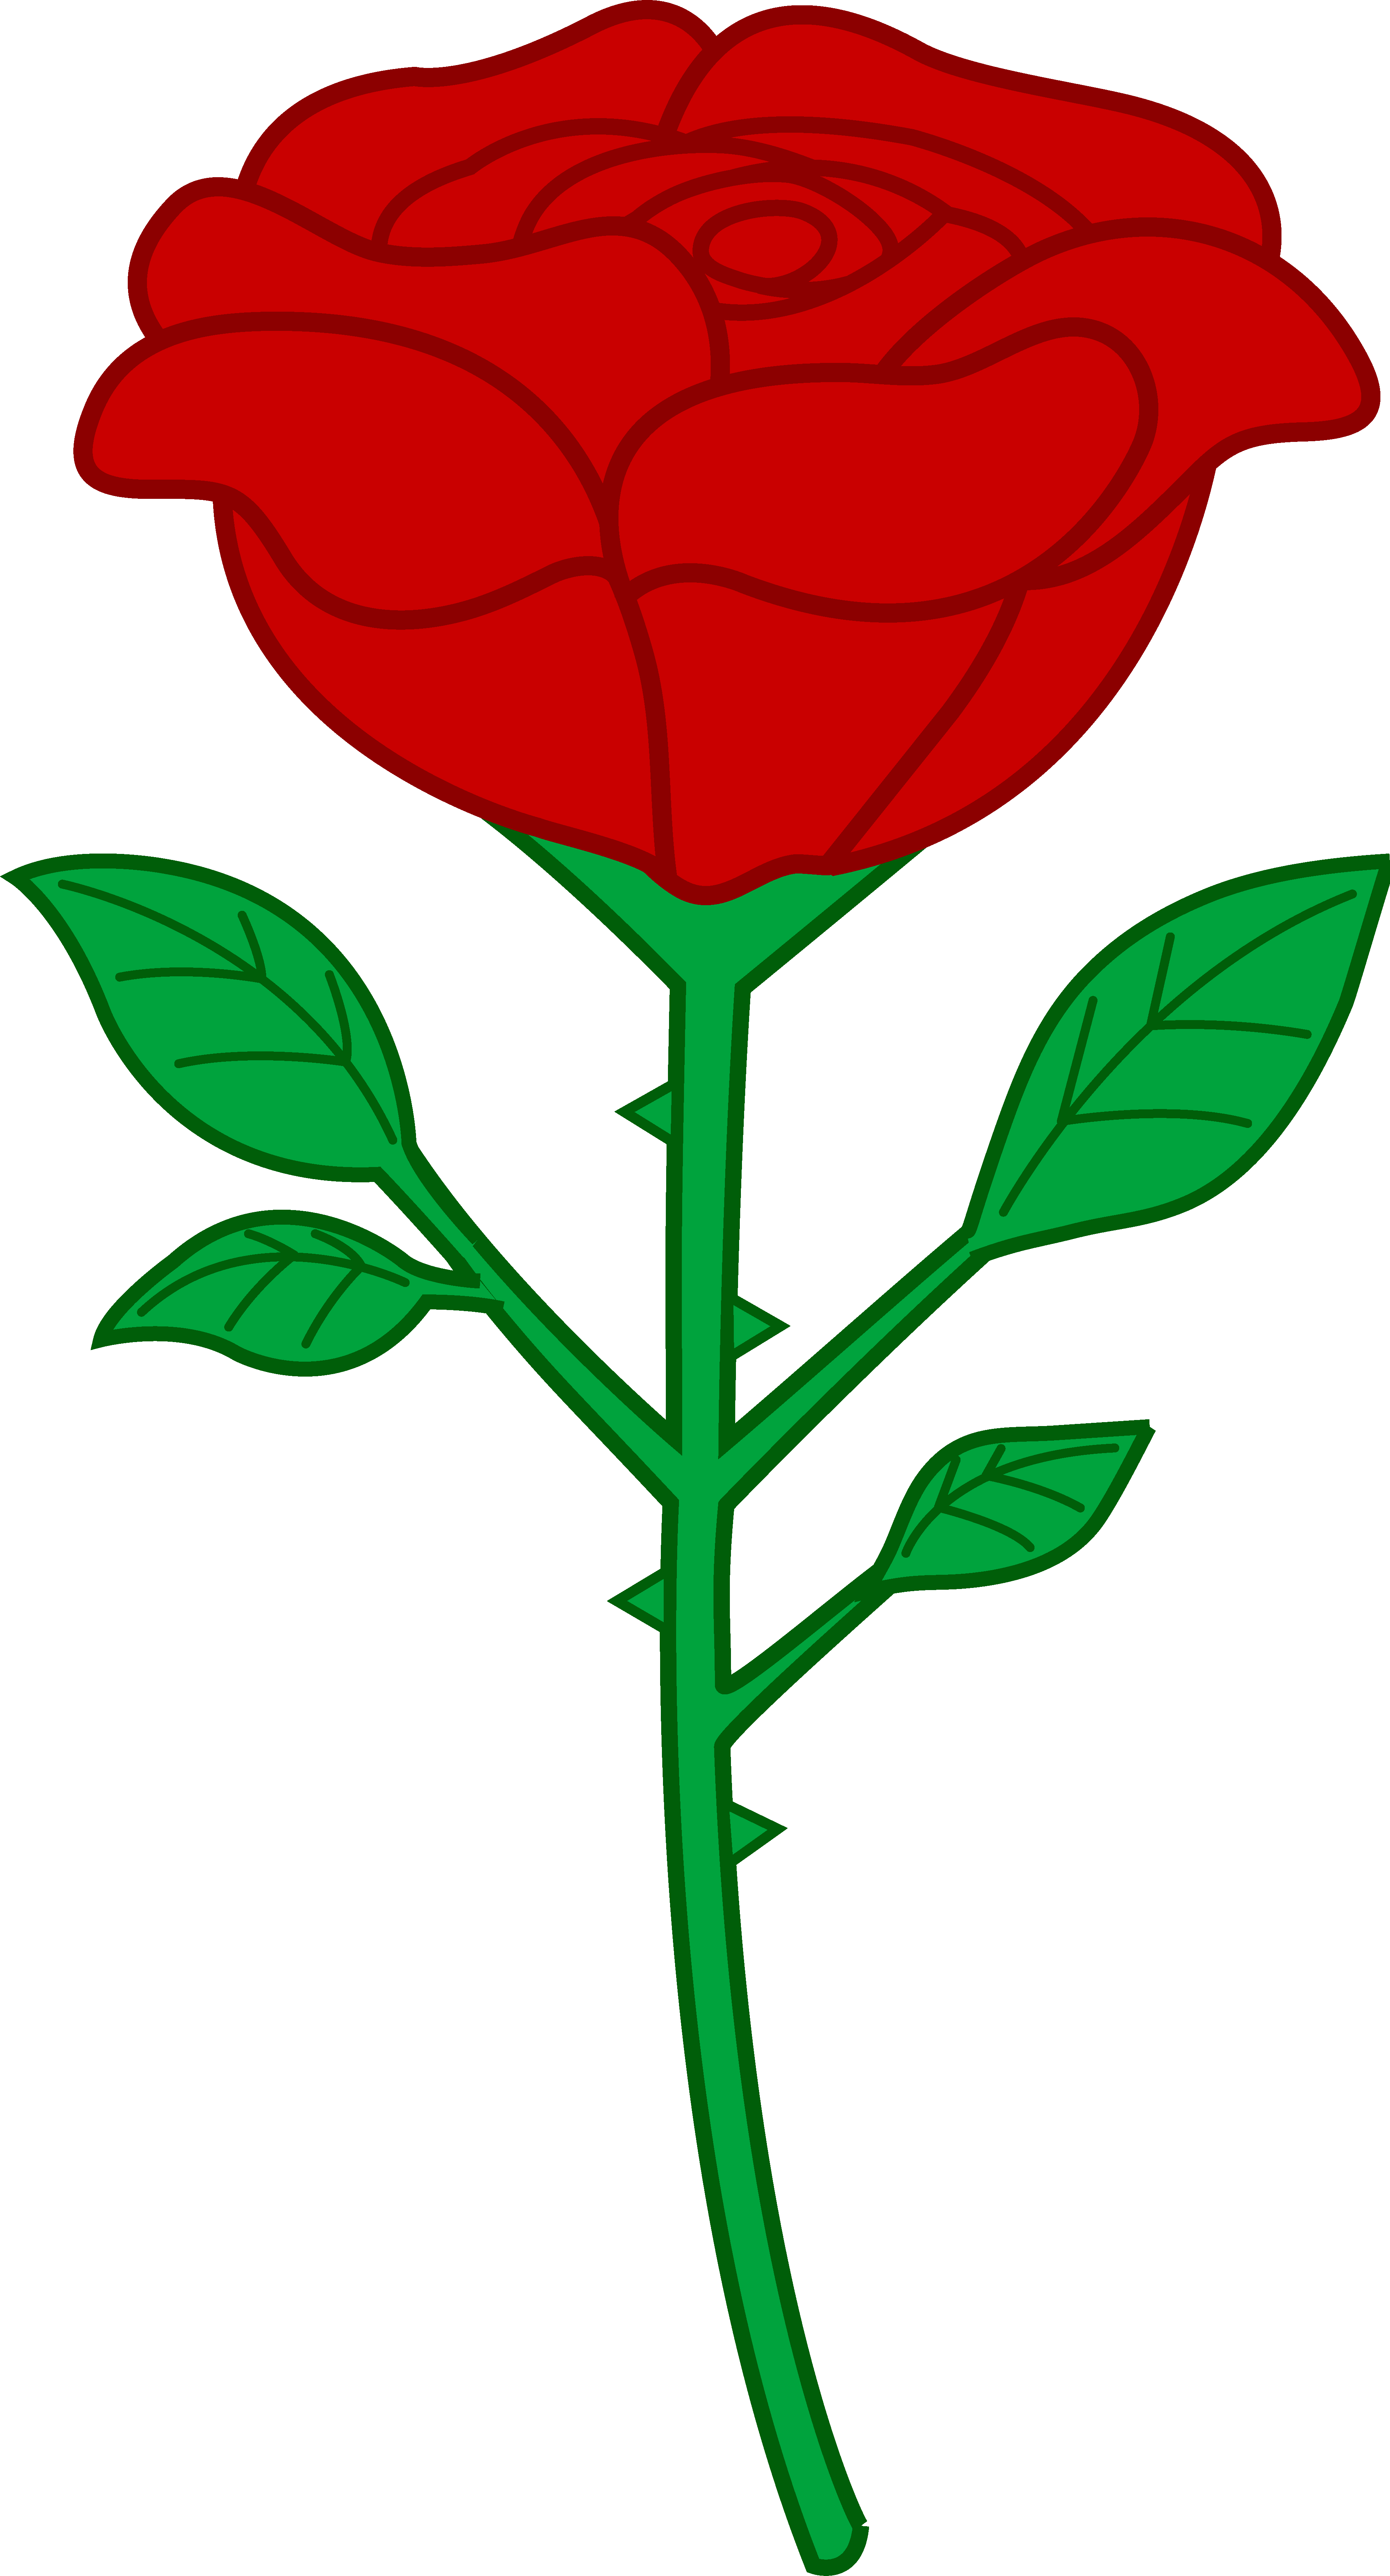 Red Rose Flower Clip Art - ClipArt Best